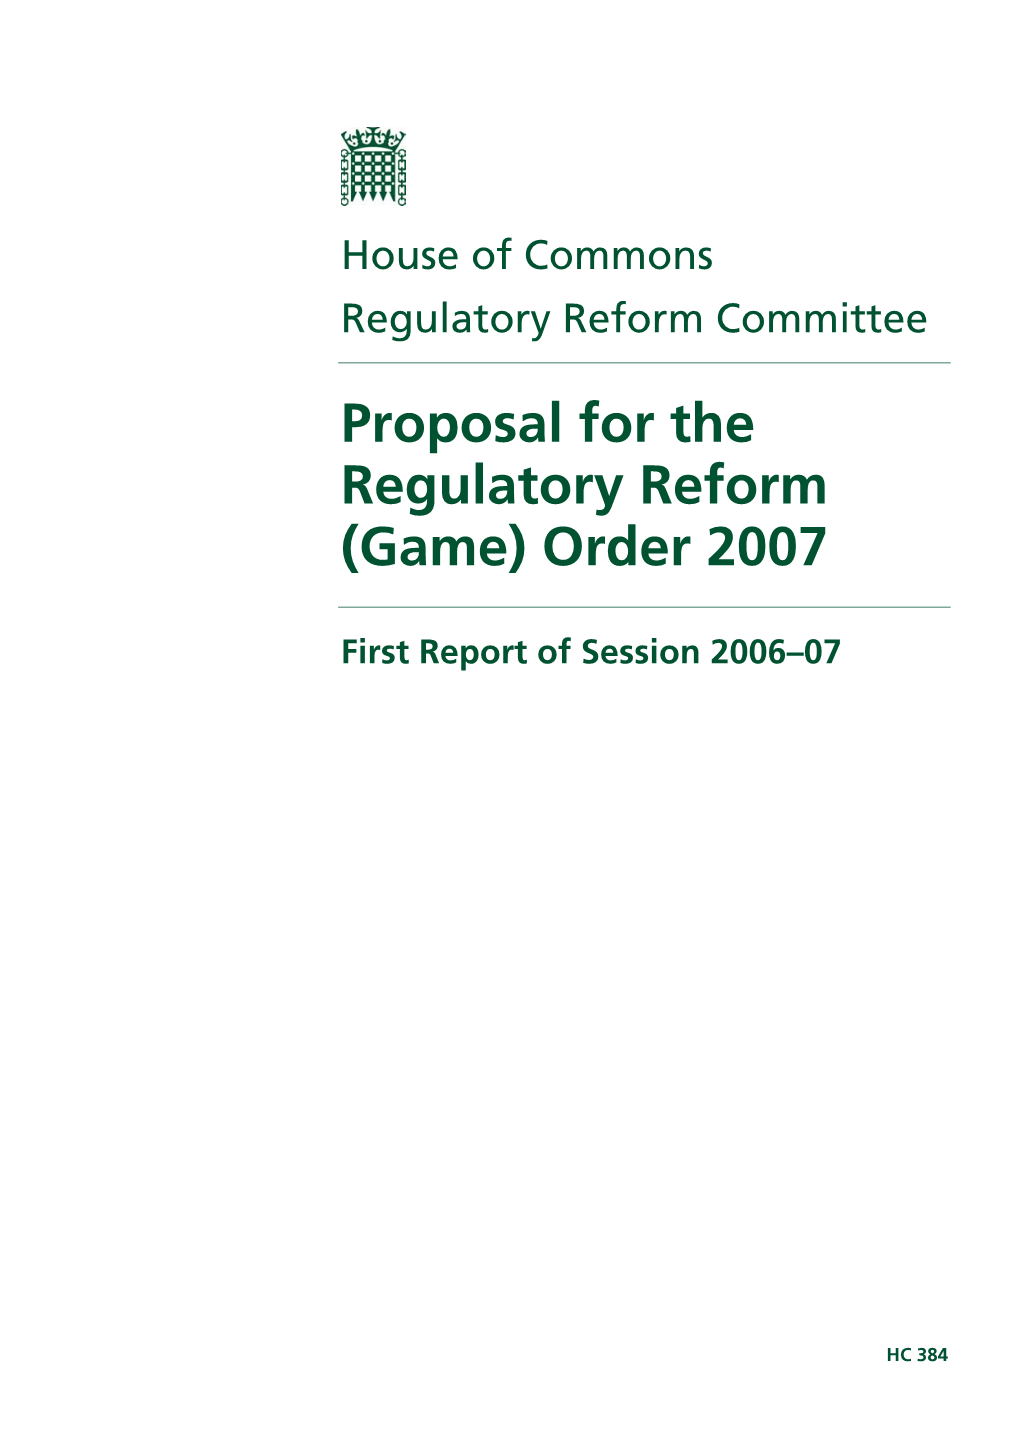 Proposal for the Regulatory Reform (Game) Order 2007